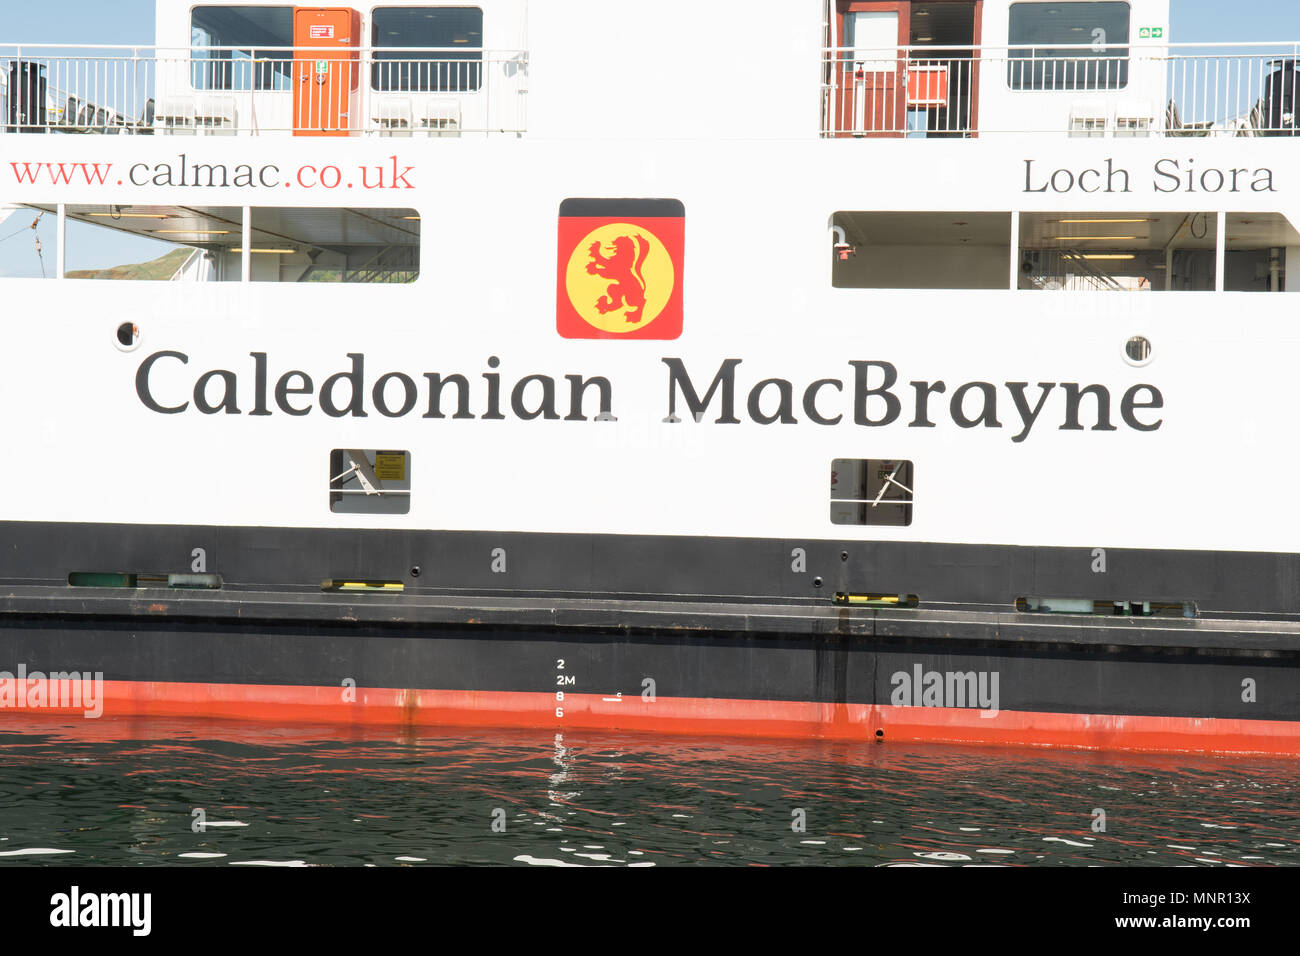 Caledonian MacBrayne calmac ferry Loch Siora Stock Photo